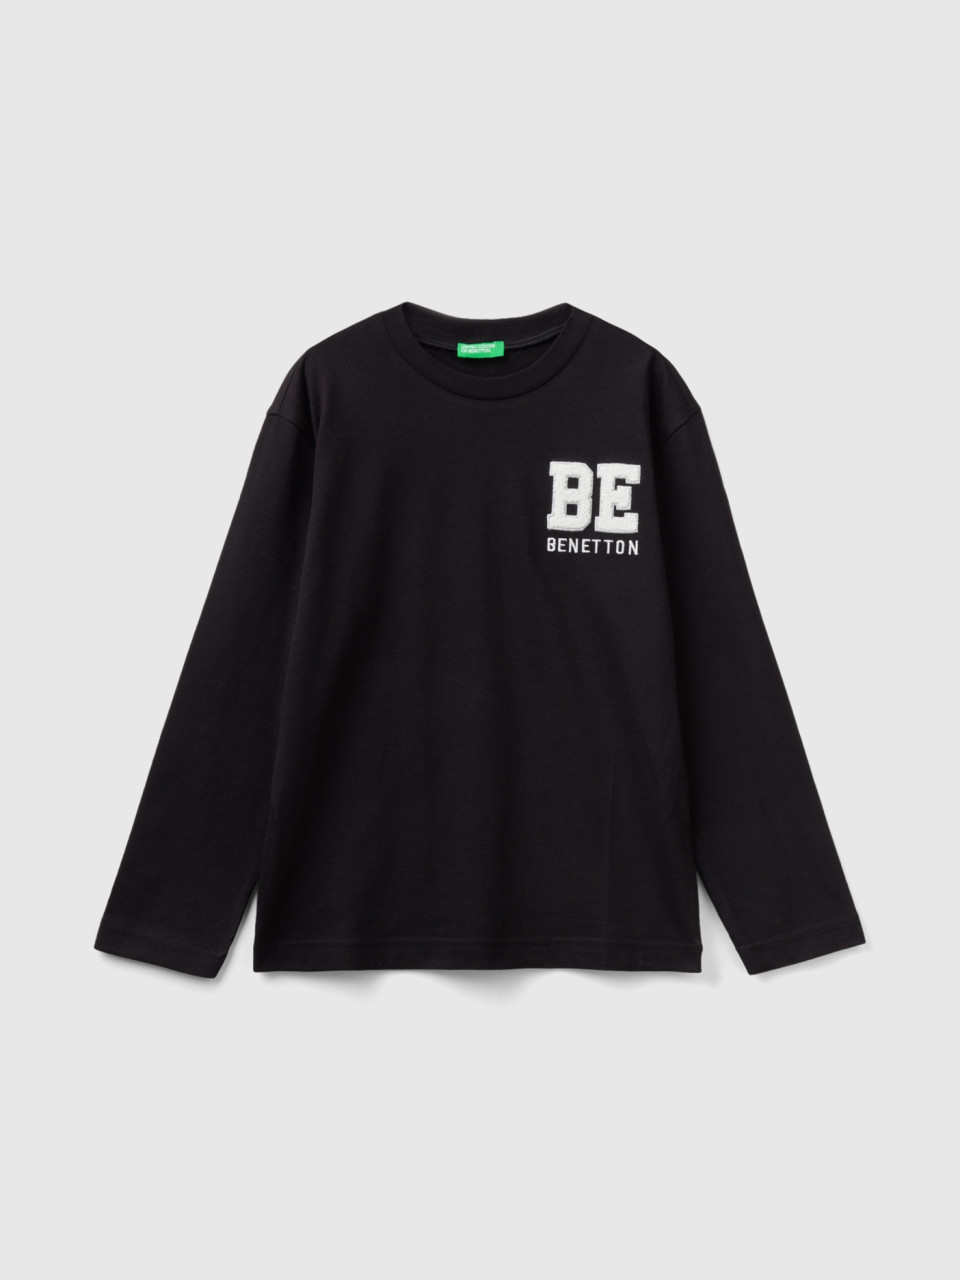 Benetton, Warm 100% Organic Cotton T-shirt, Black, Kids